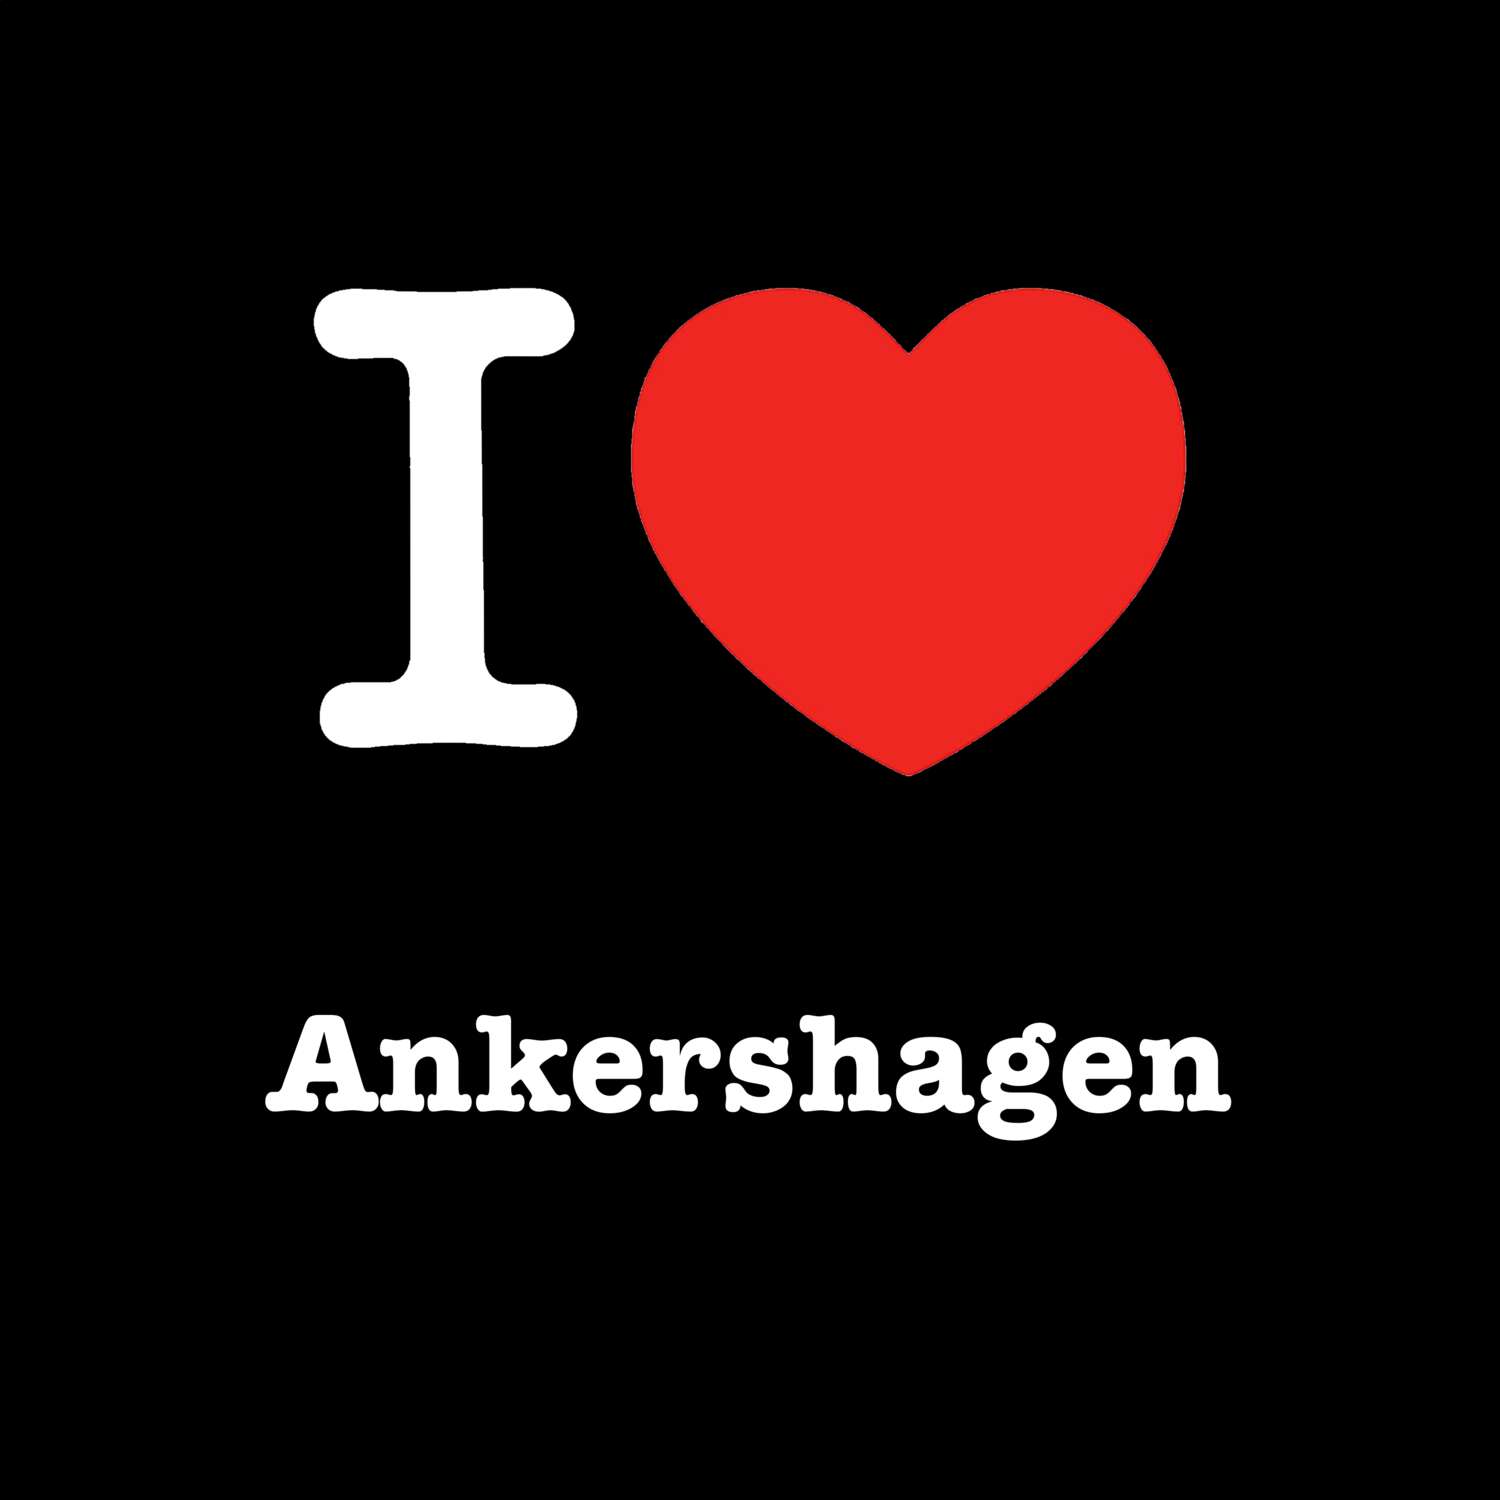 Ankershagen T-Shirt »I love«